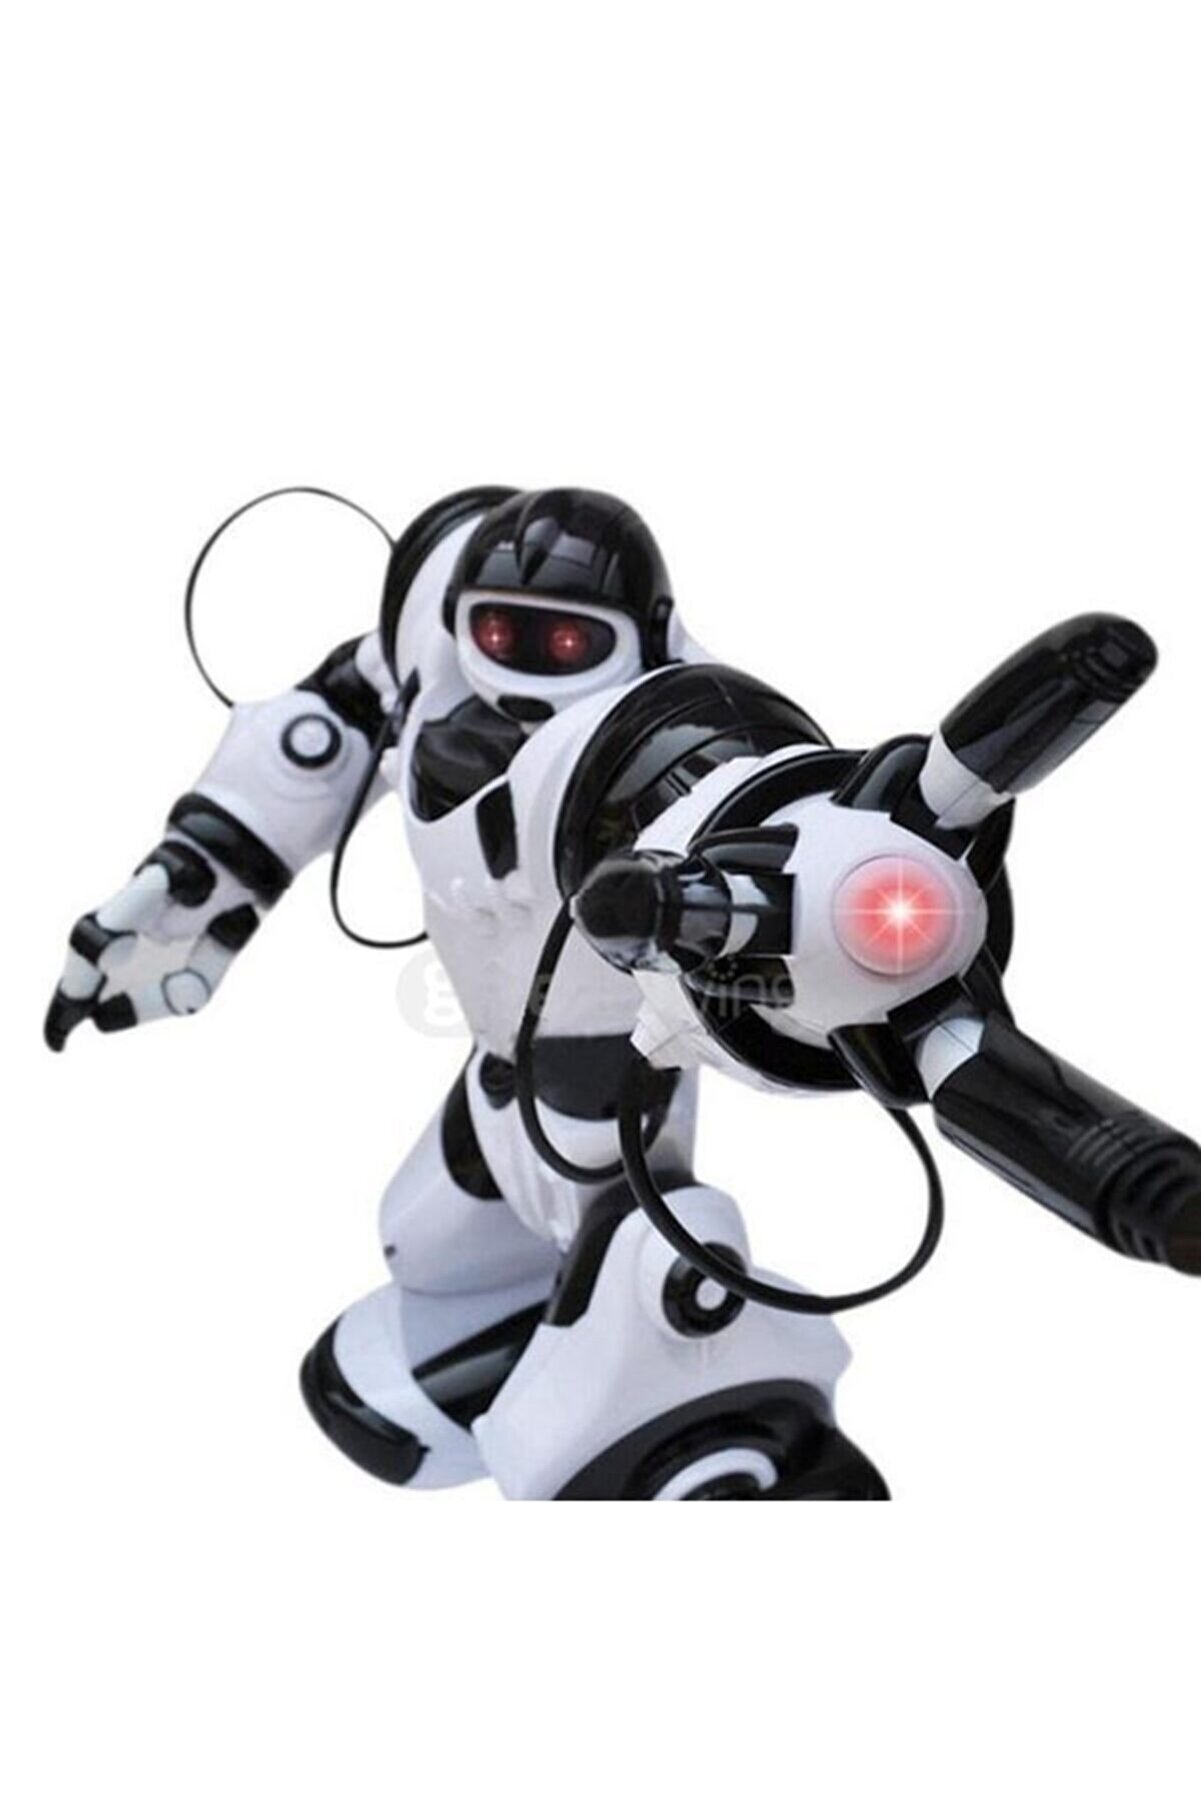 Mega Yapay Zeka Full Fonksiyon Uzaktan Kumandalı Robot